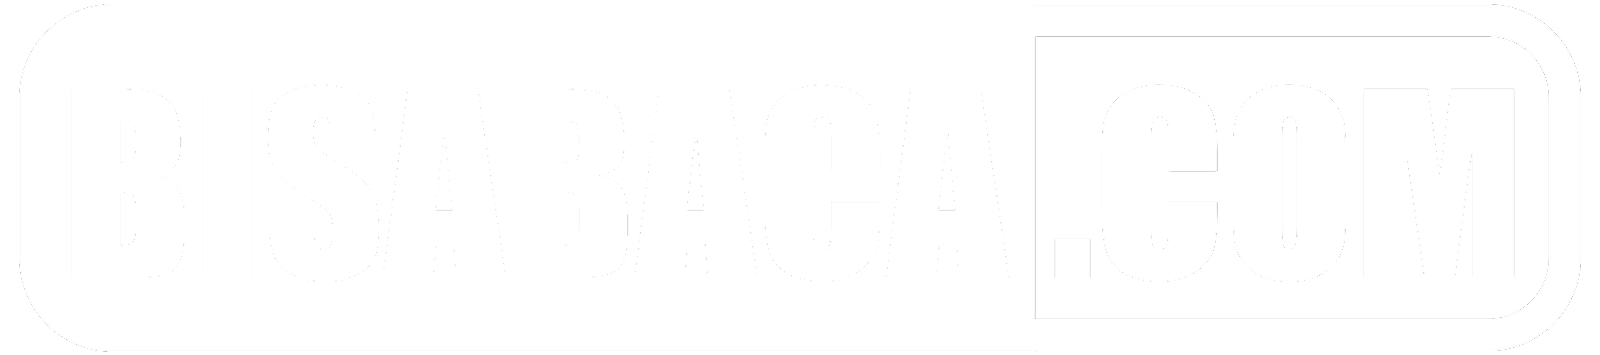 Bisabaca.com